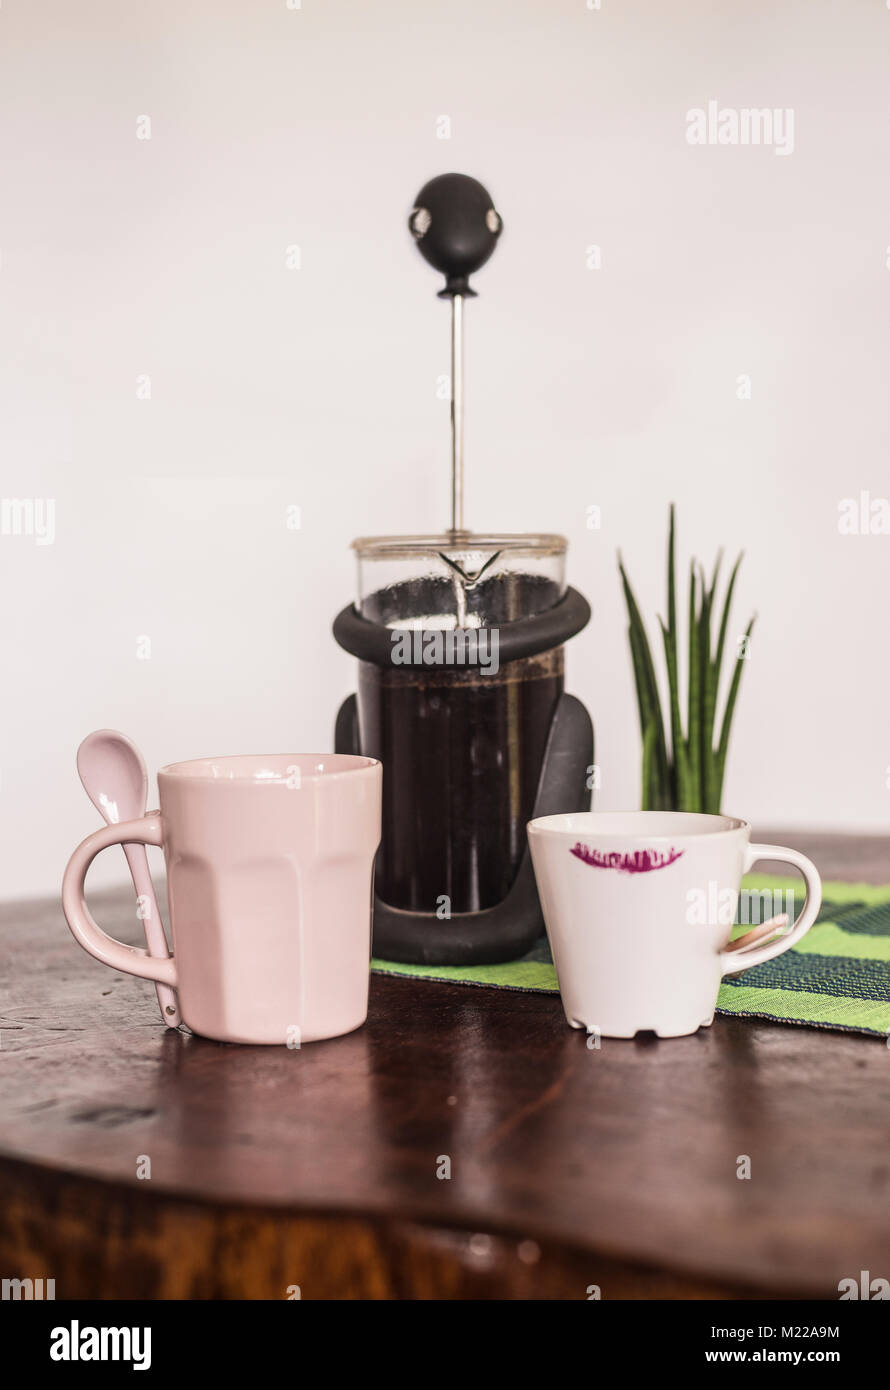 Prensa francesa café, frijoles y tazas de café Fotografía de stock - Alamy